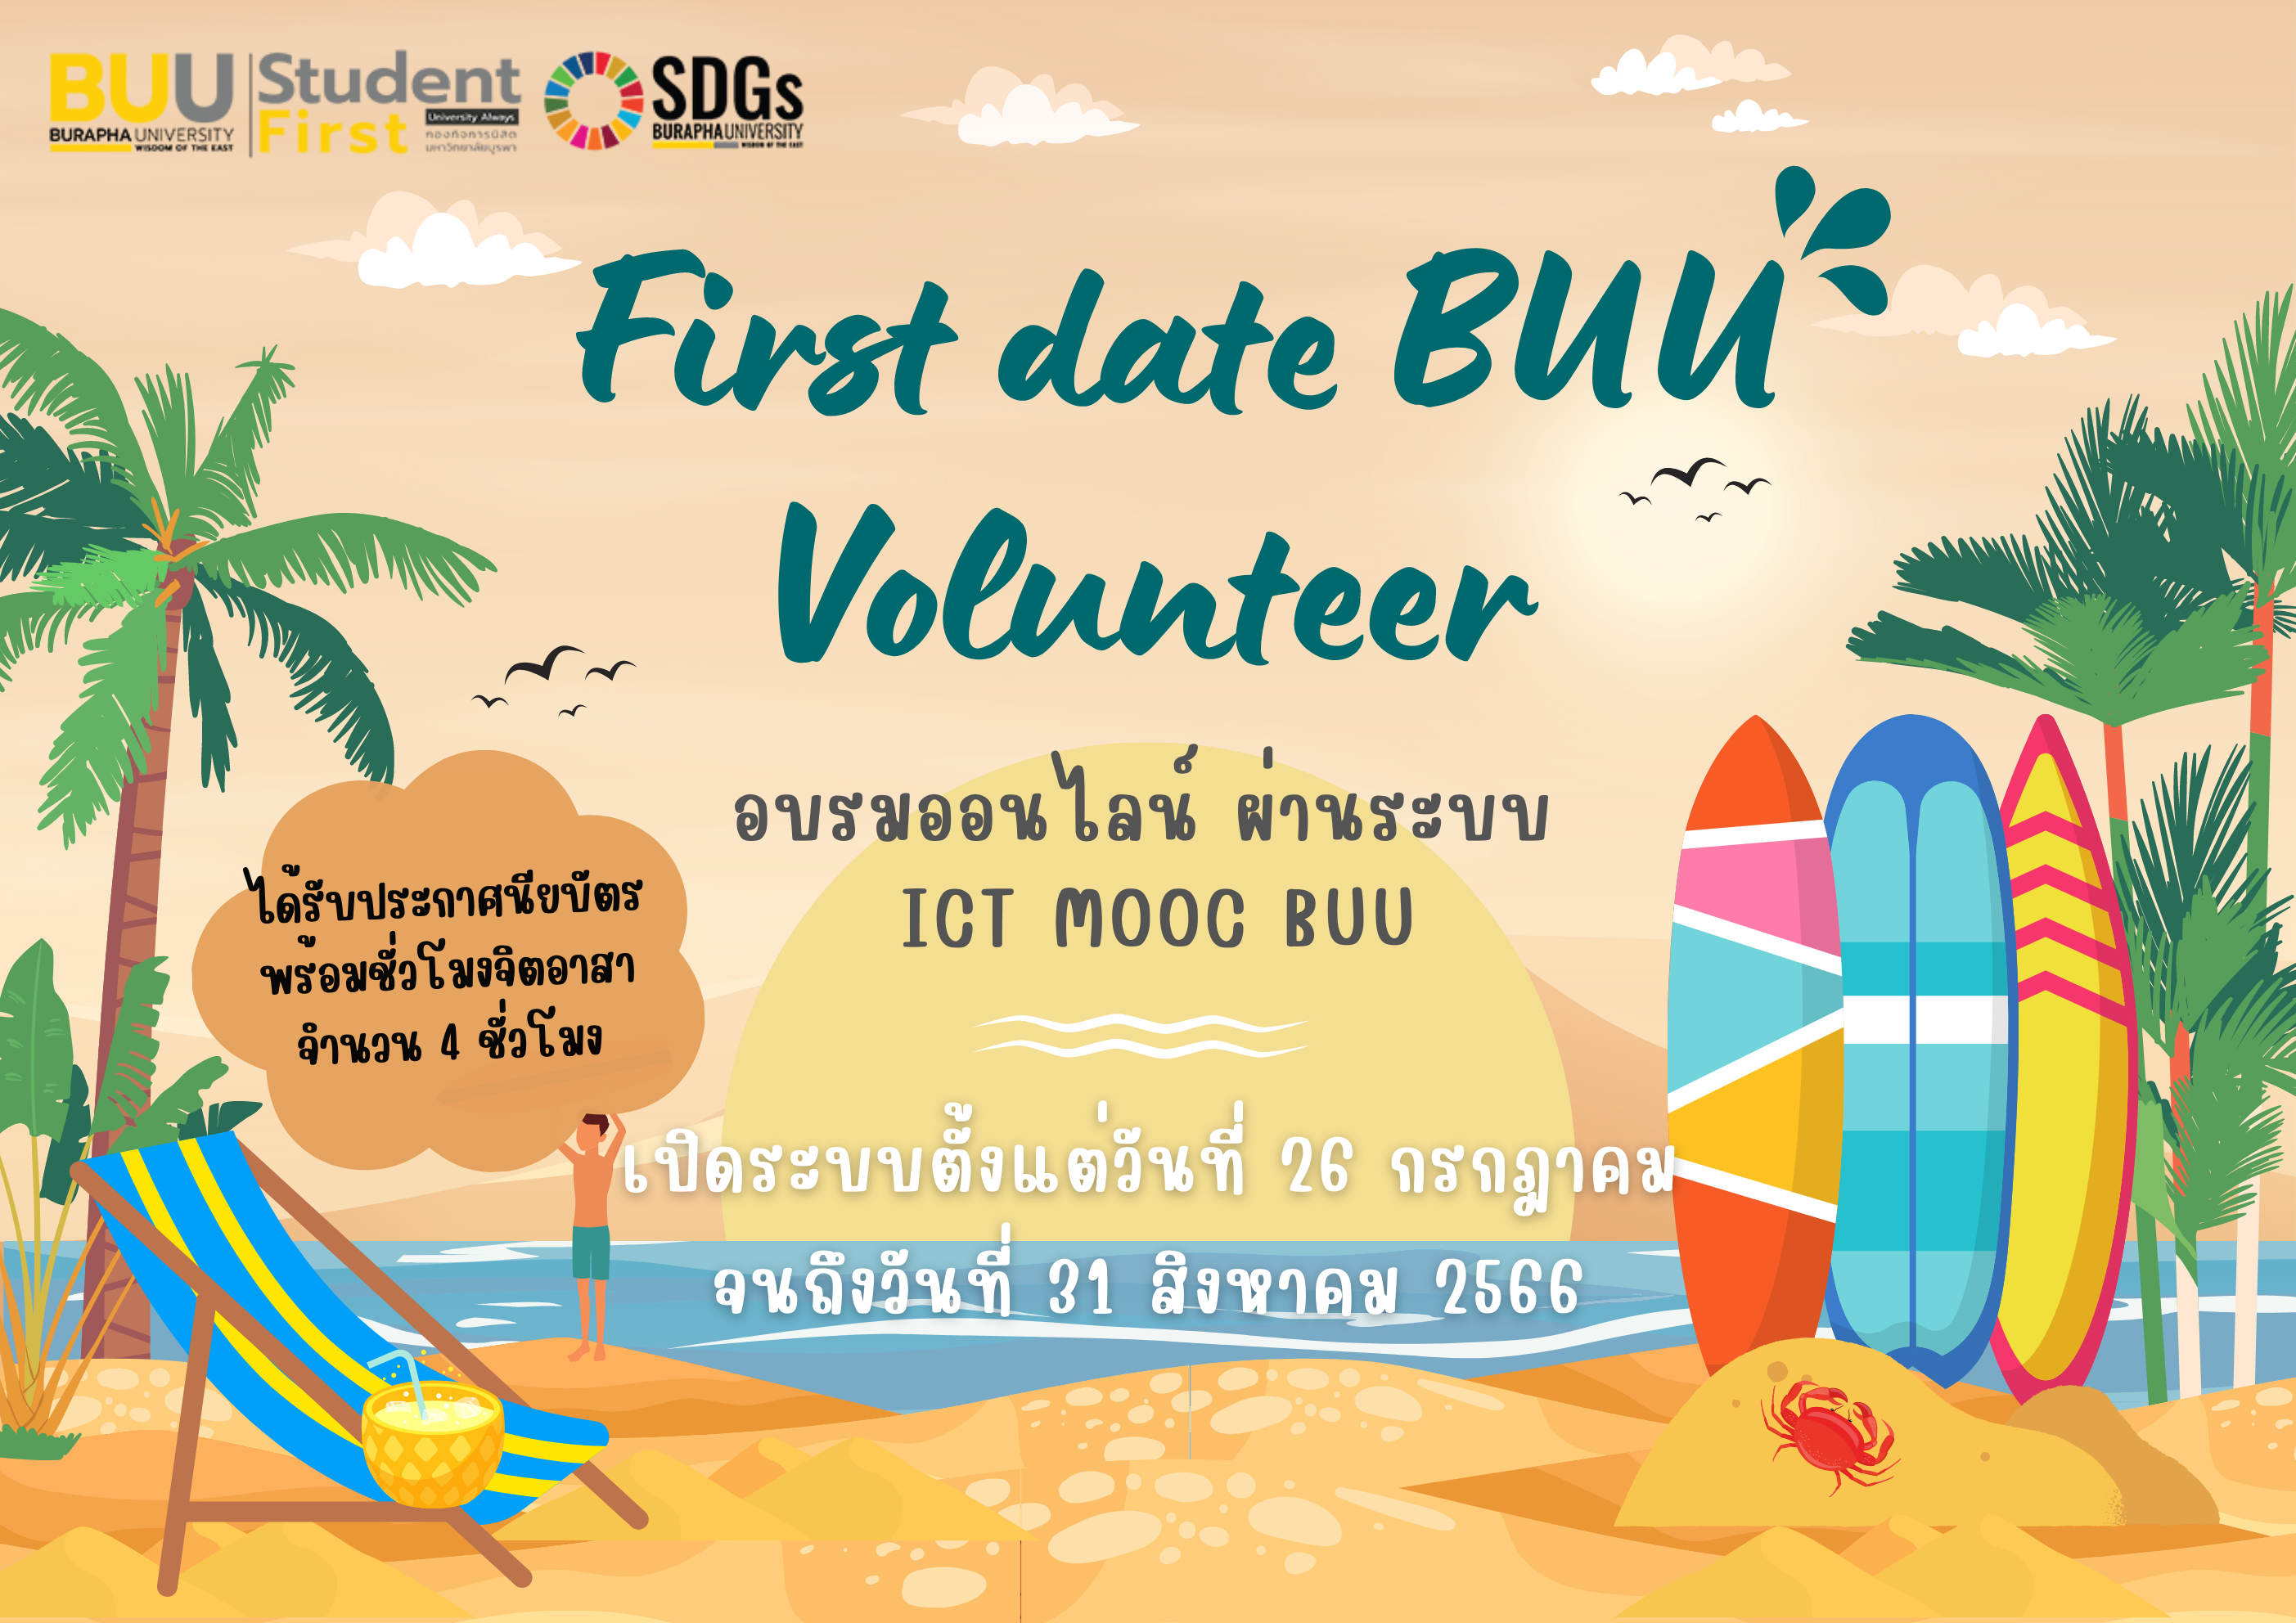 First date BUU Volunteer affairs005